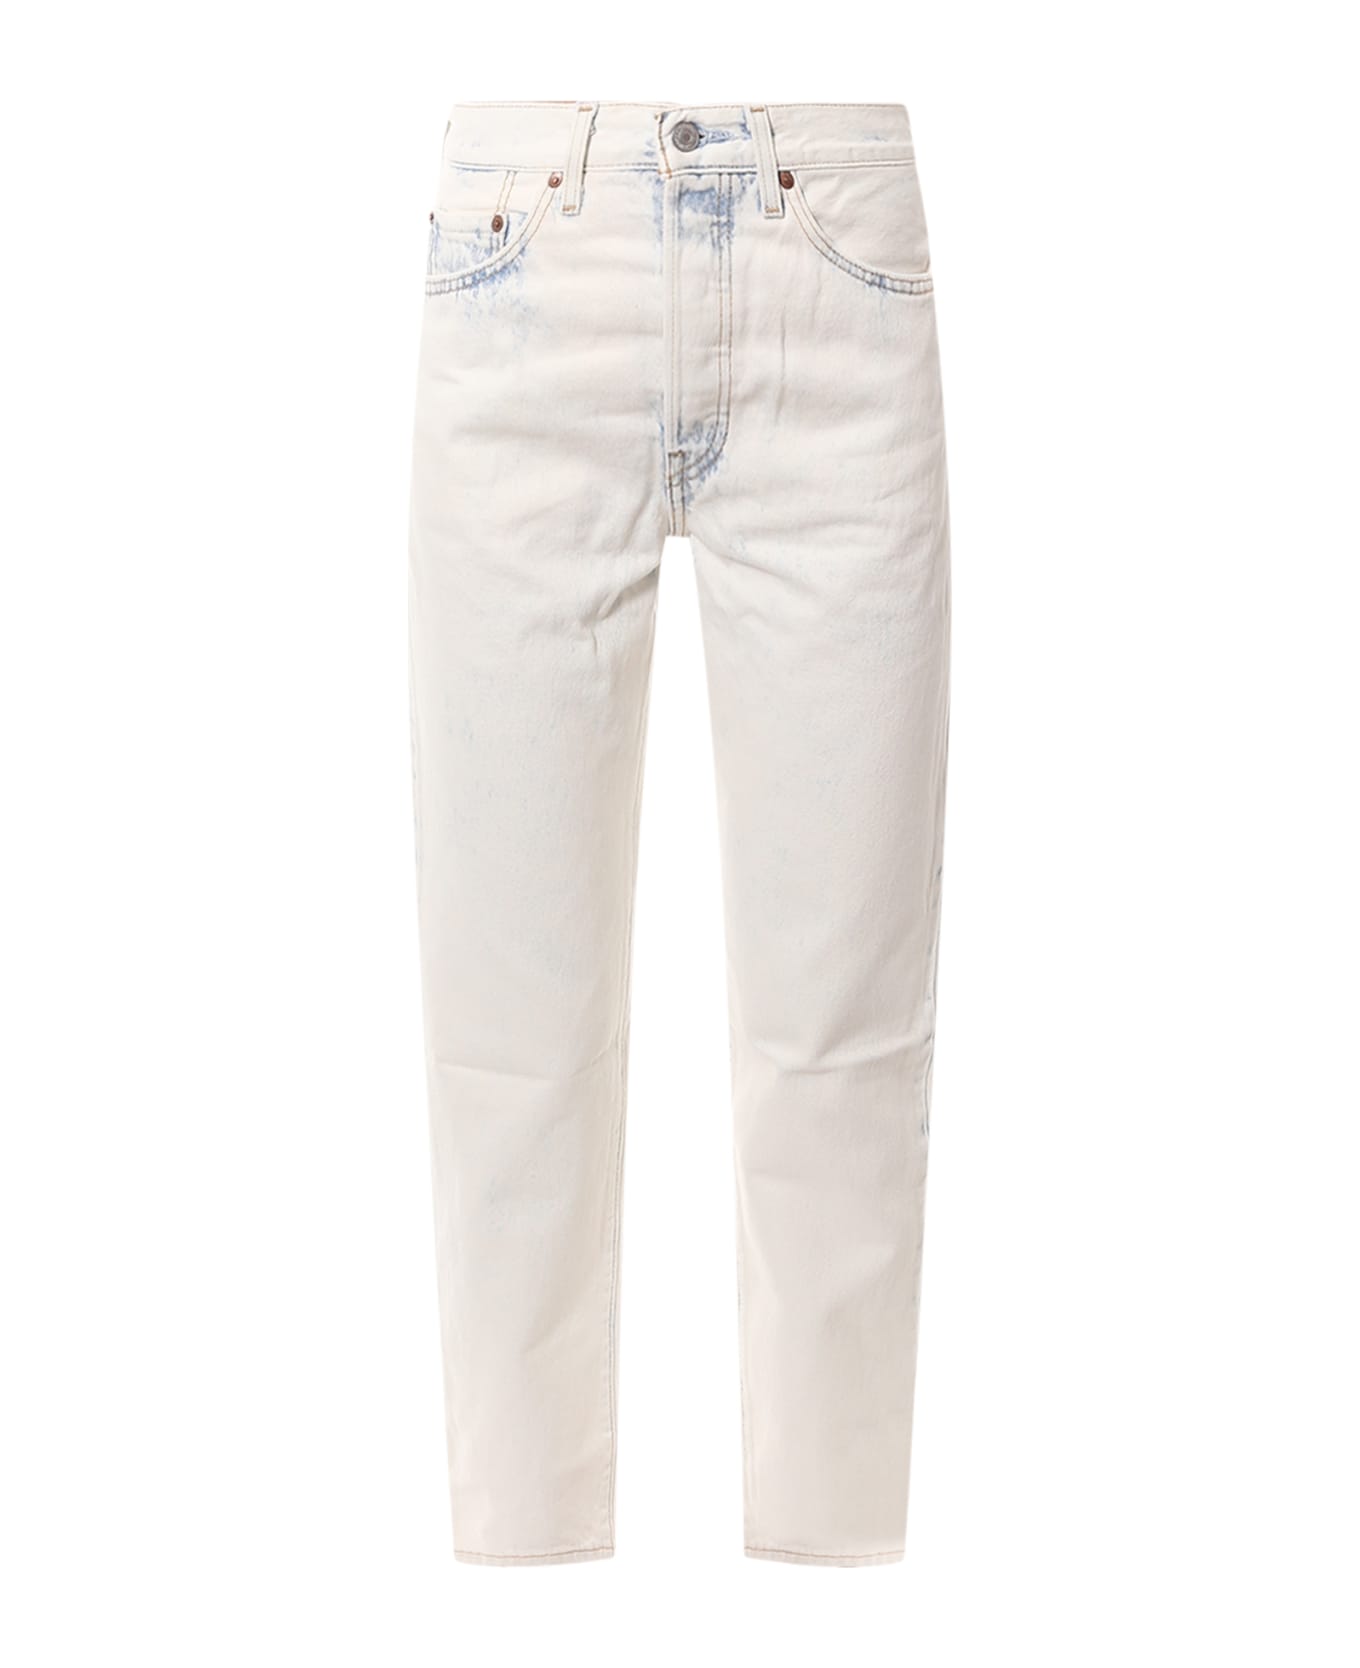 Levi's 501 81 Jeans - White